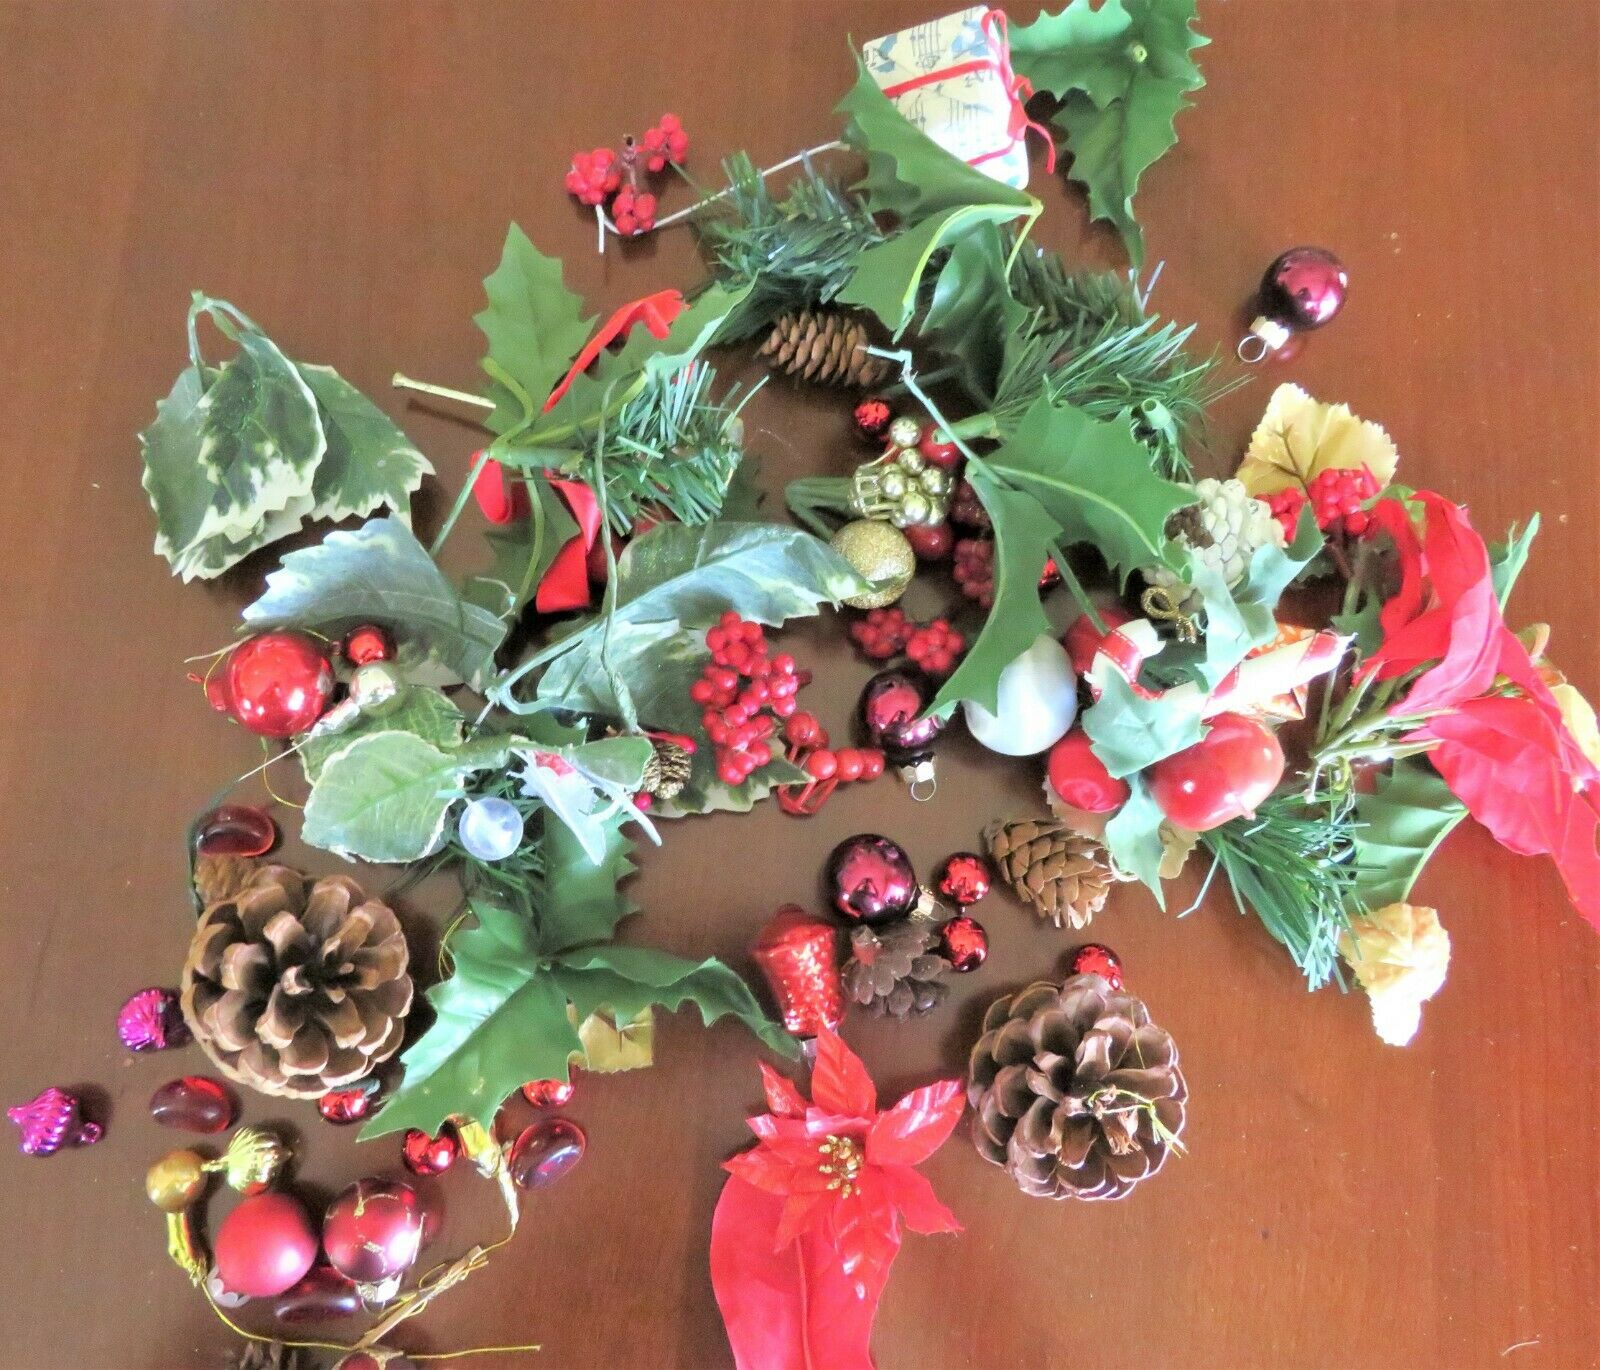 Mixed Christmas small silks, greens, mini ornaments, picks of poinsettia, pine